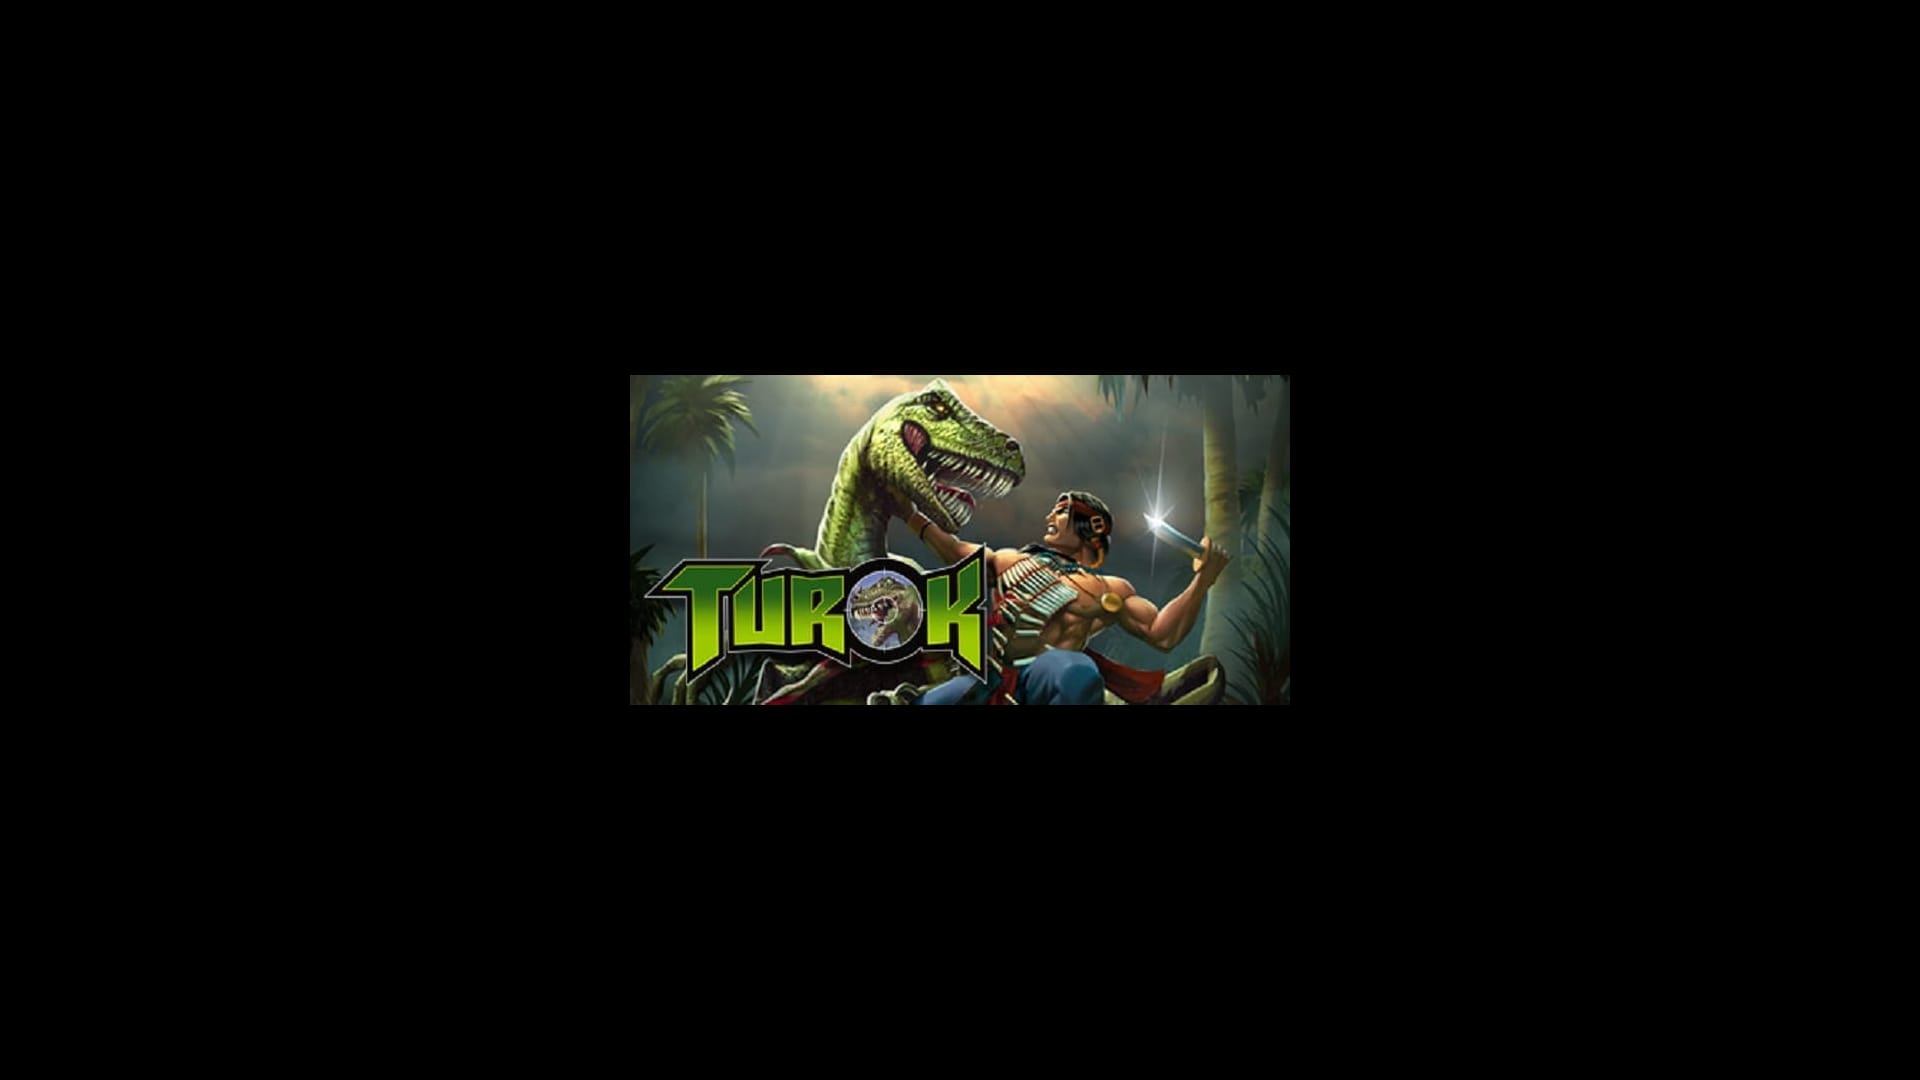 Turok: Dinosaur Hunter Review - I Am Turok! | TechRaptor